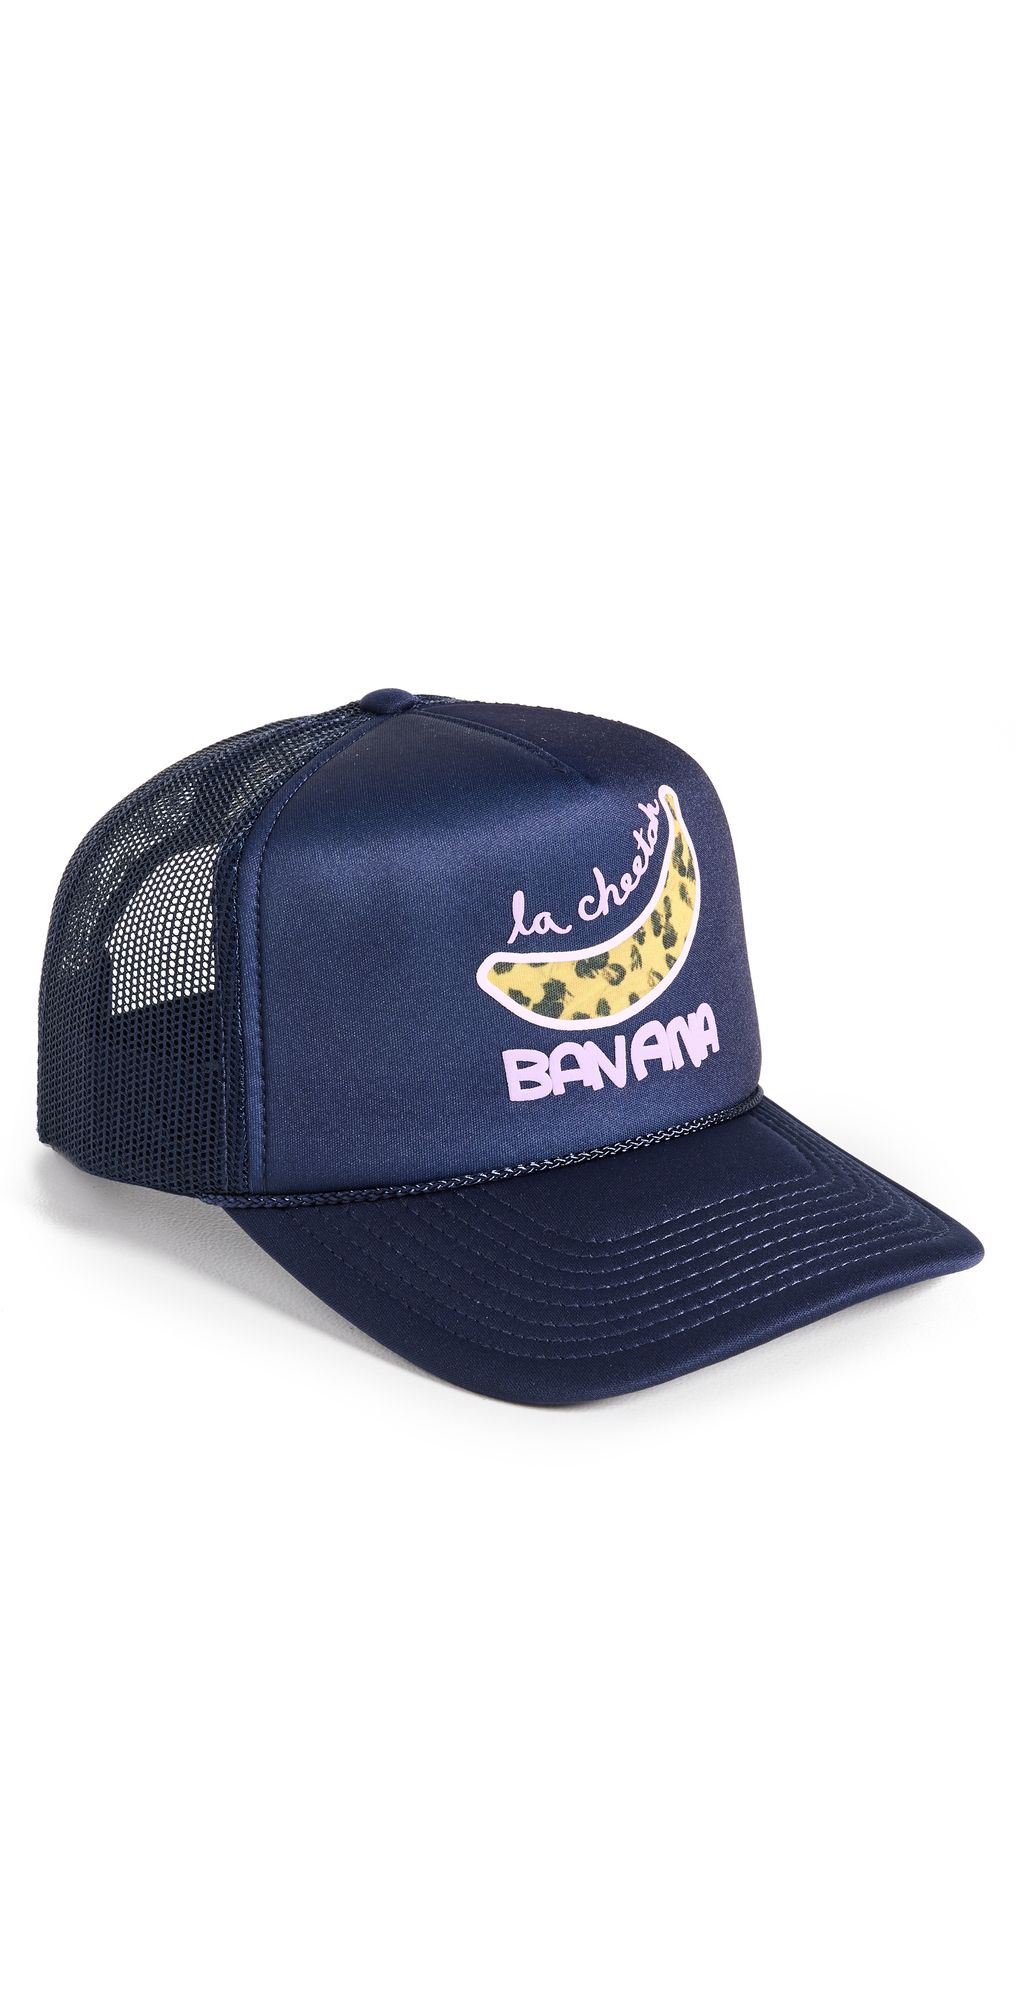 Kerri Rosenthal Le Cheetah Banana Trucker Hat | SHOPBOP | Shopbop